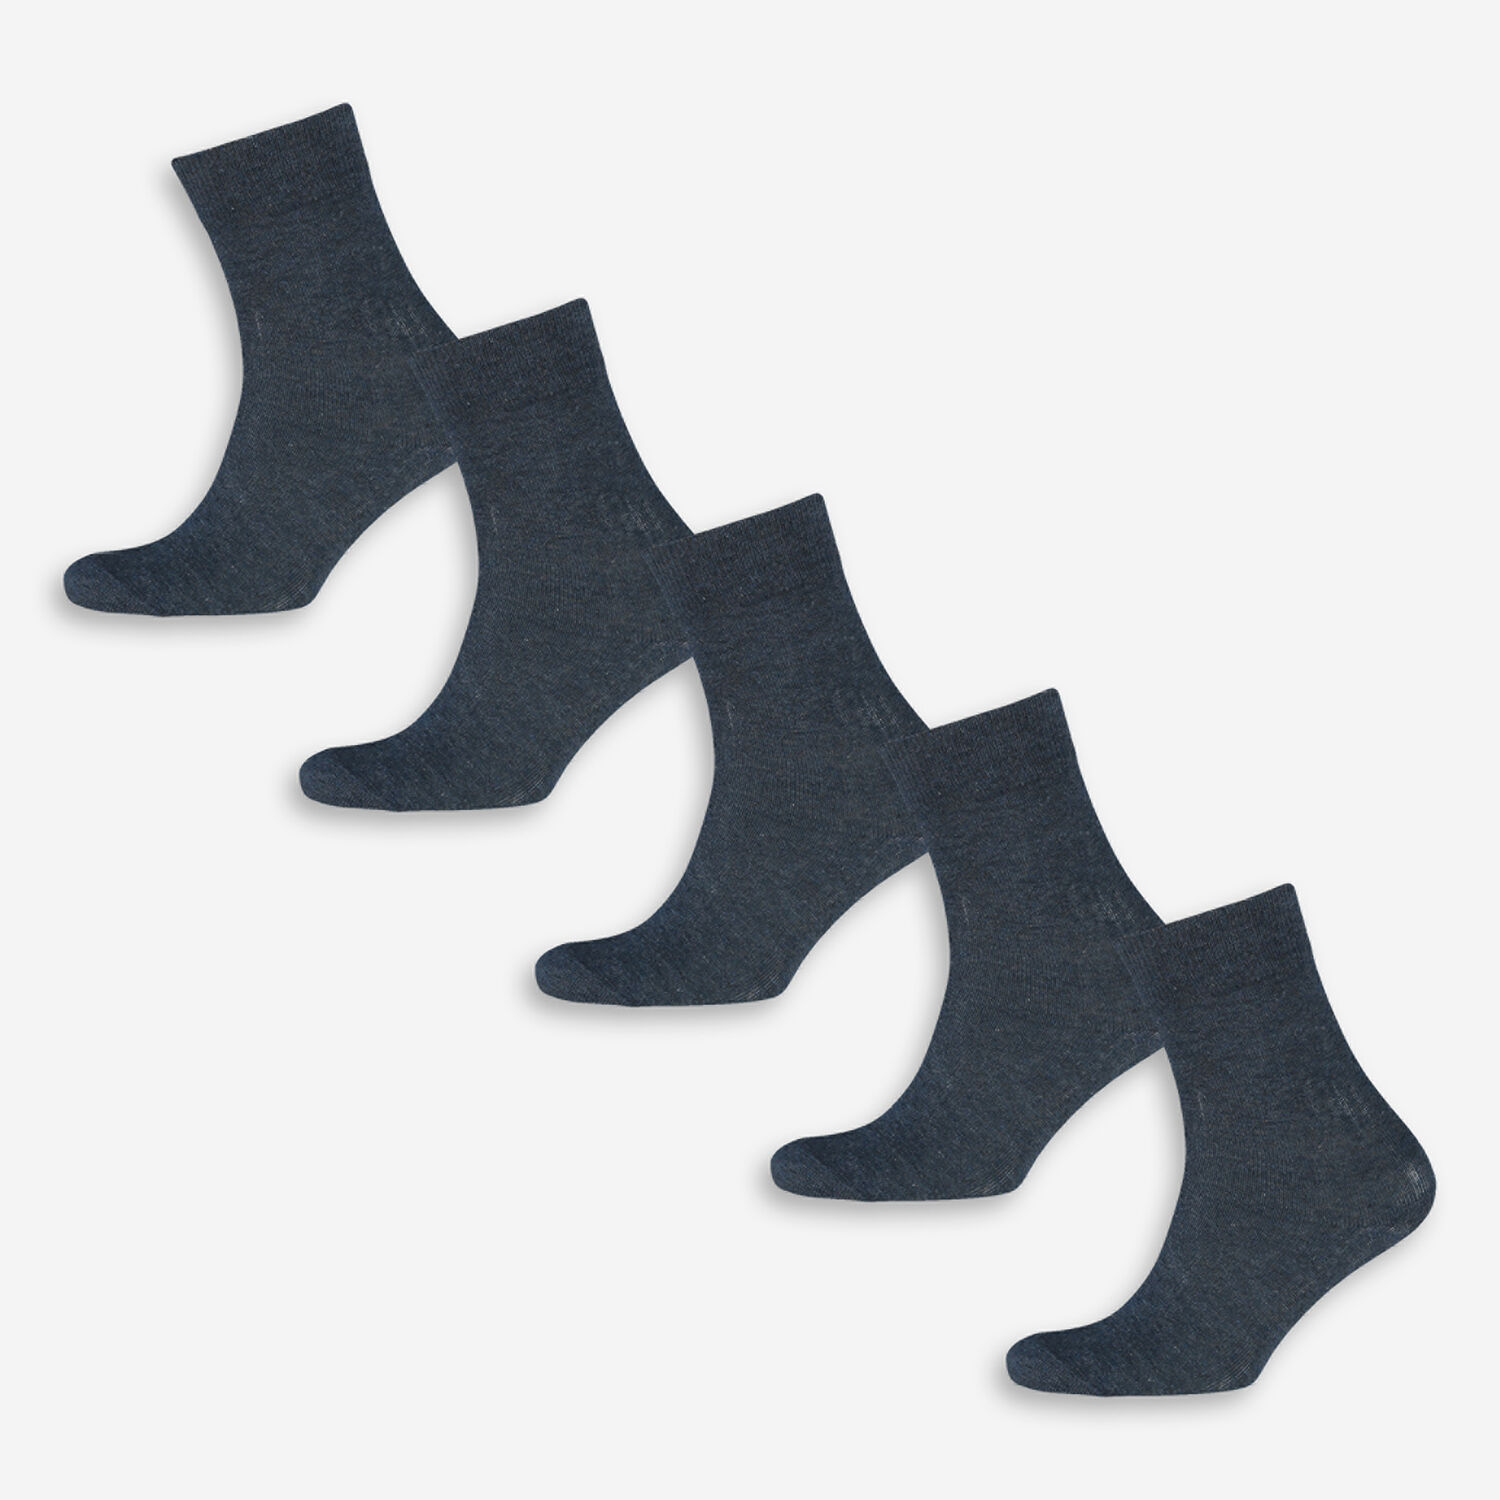 Comfort Blue Socks - 5 TK UK Pack Maxx